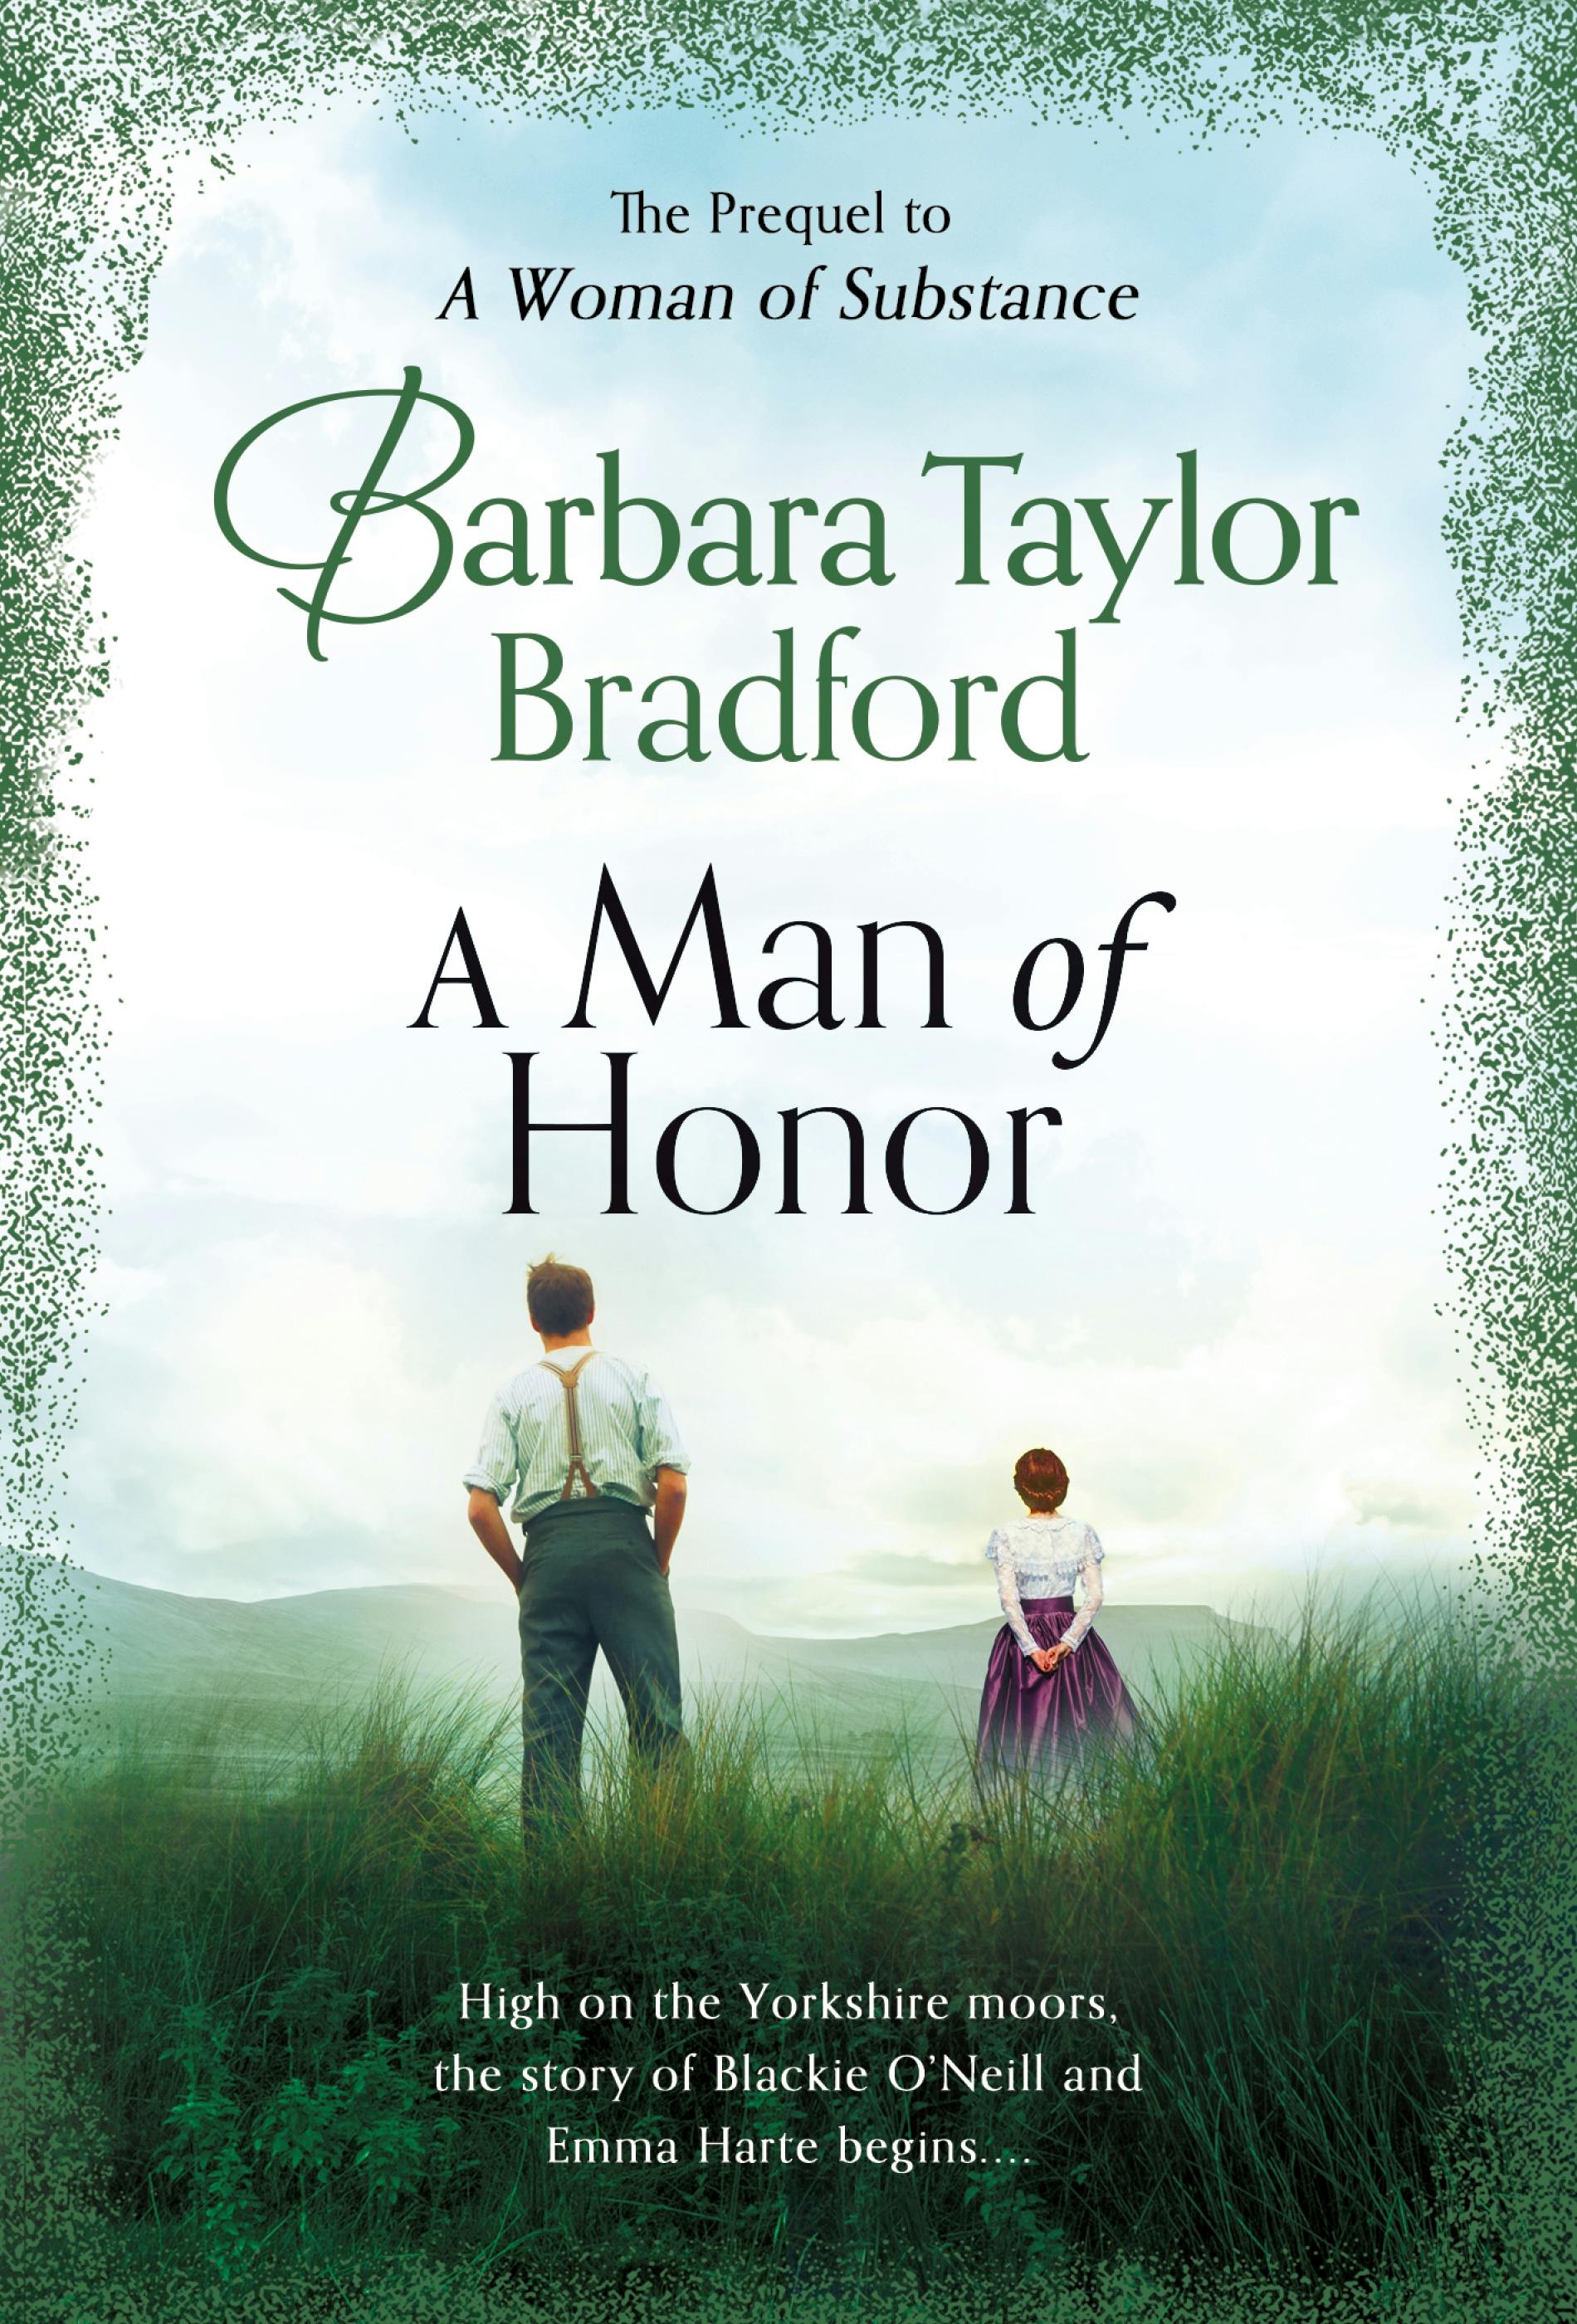 The Official Barbara Taylor Bradford USA website